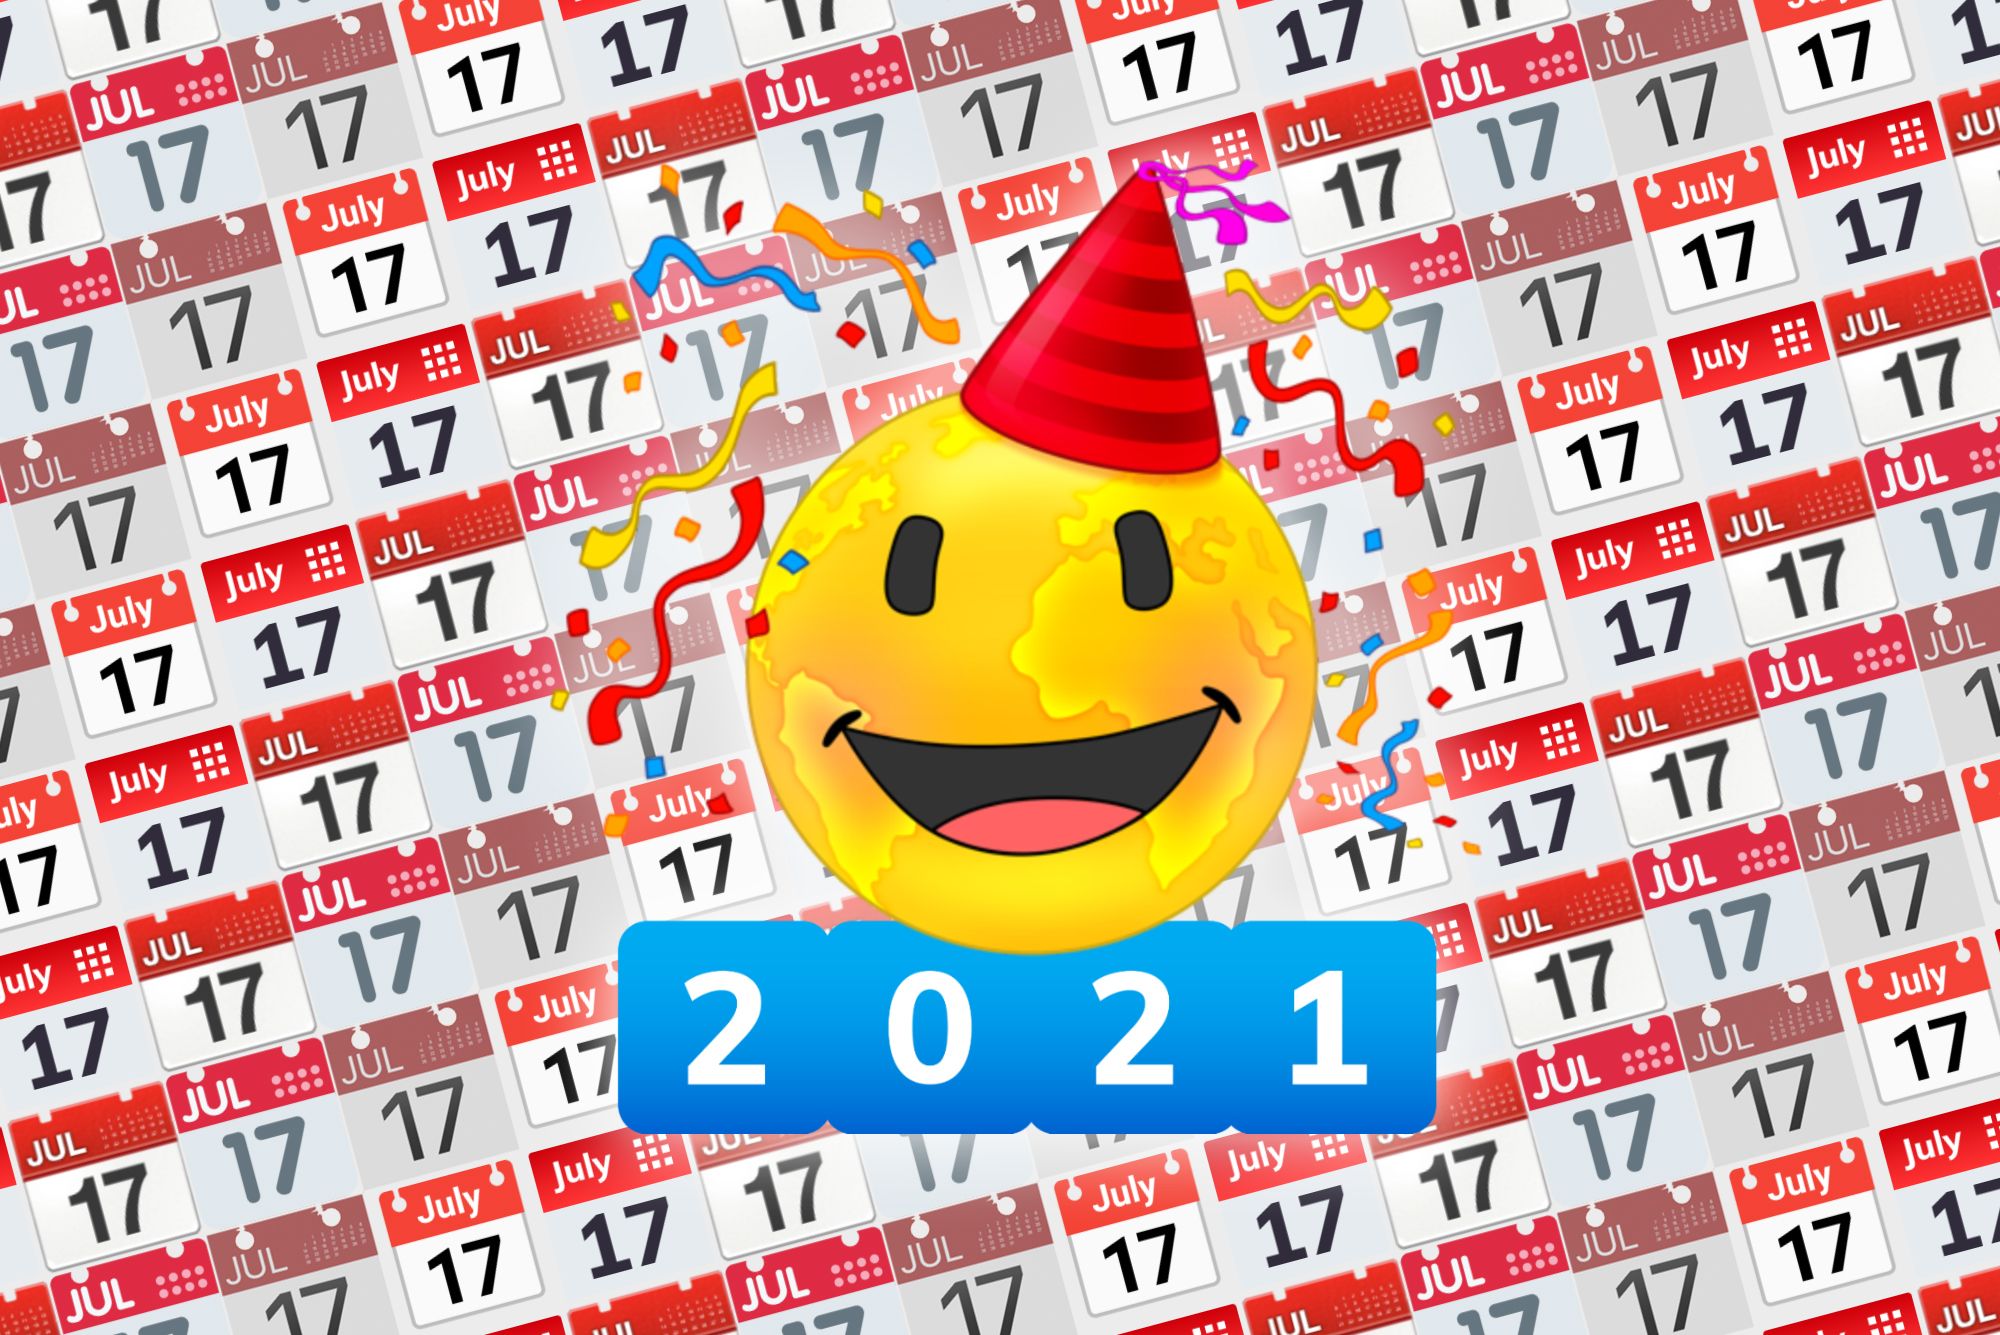 What’s New on World Emoji Day 2021